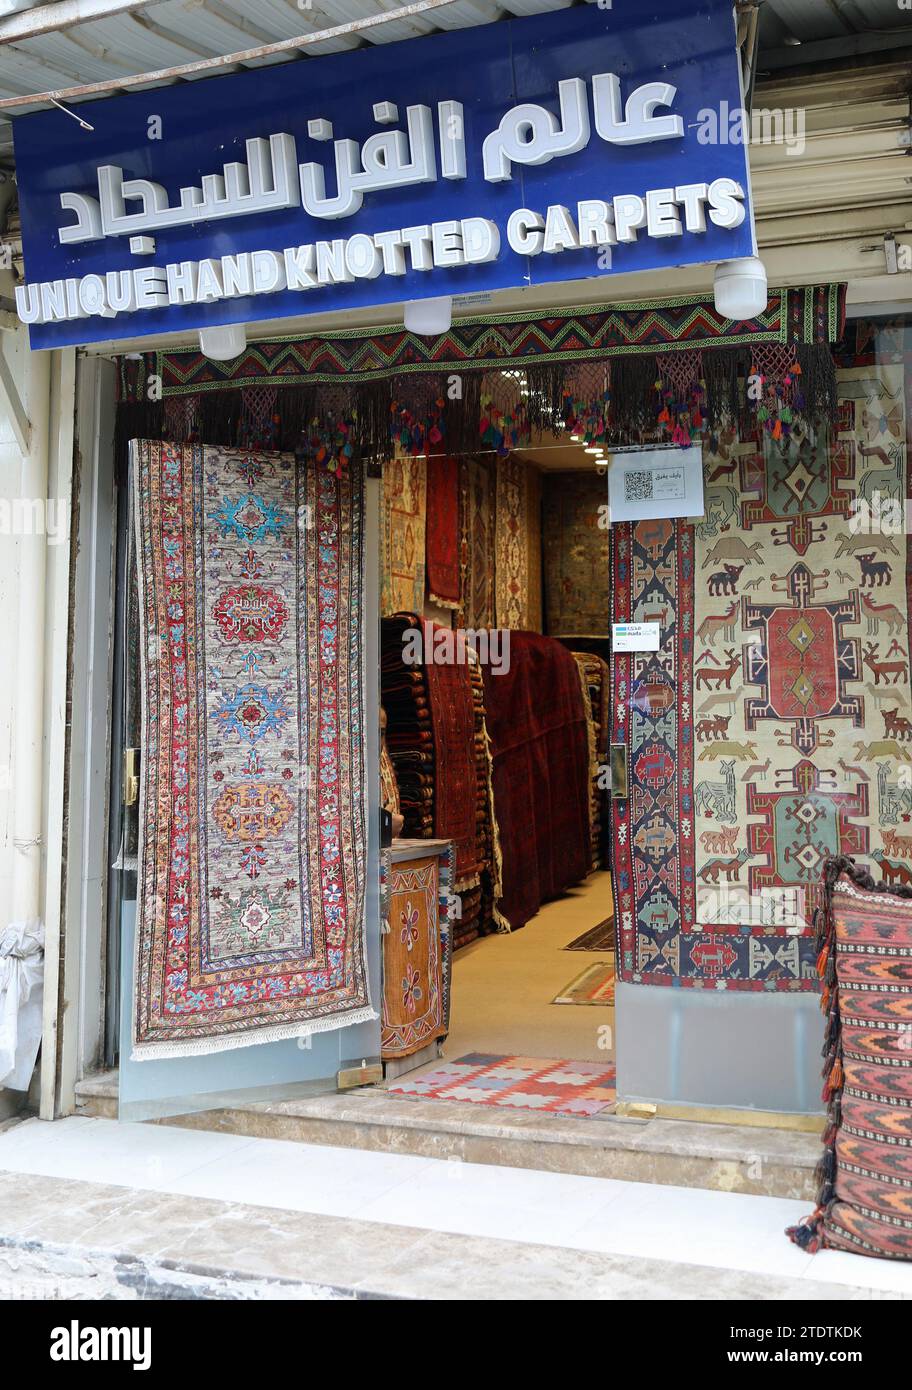 Hand knotted carpet shop at Riyadh in Saudi Arabia Stock Photo